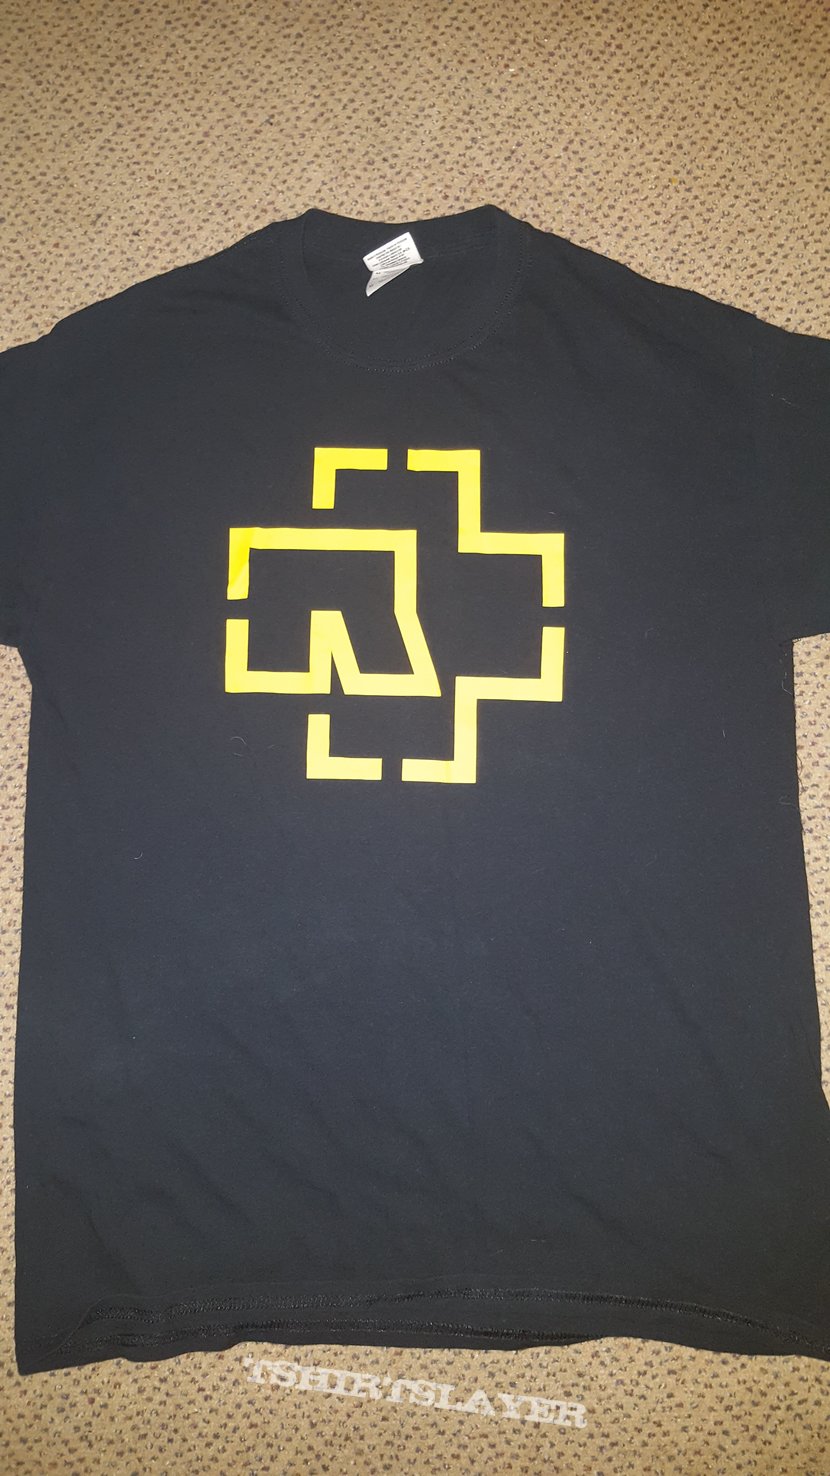 Rammstein T shirt | TShirtSlayer TShirt and BattleJacket Gallery